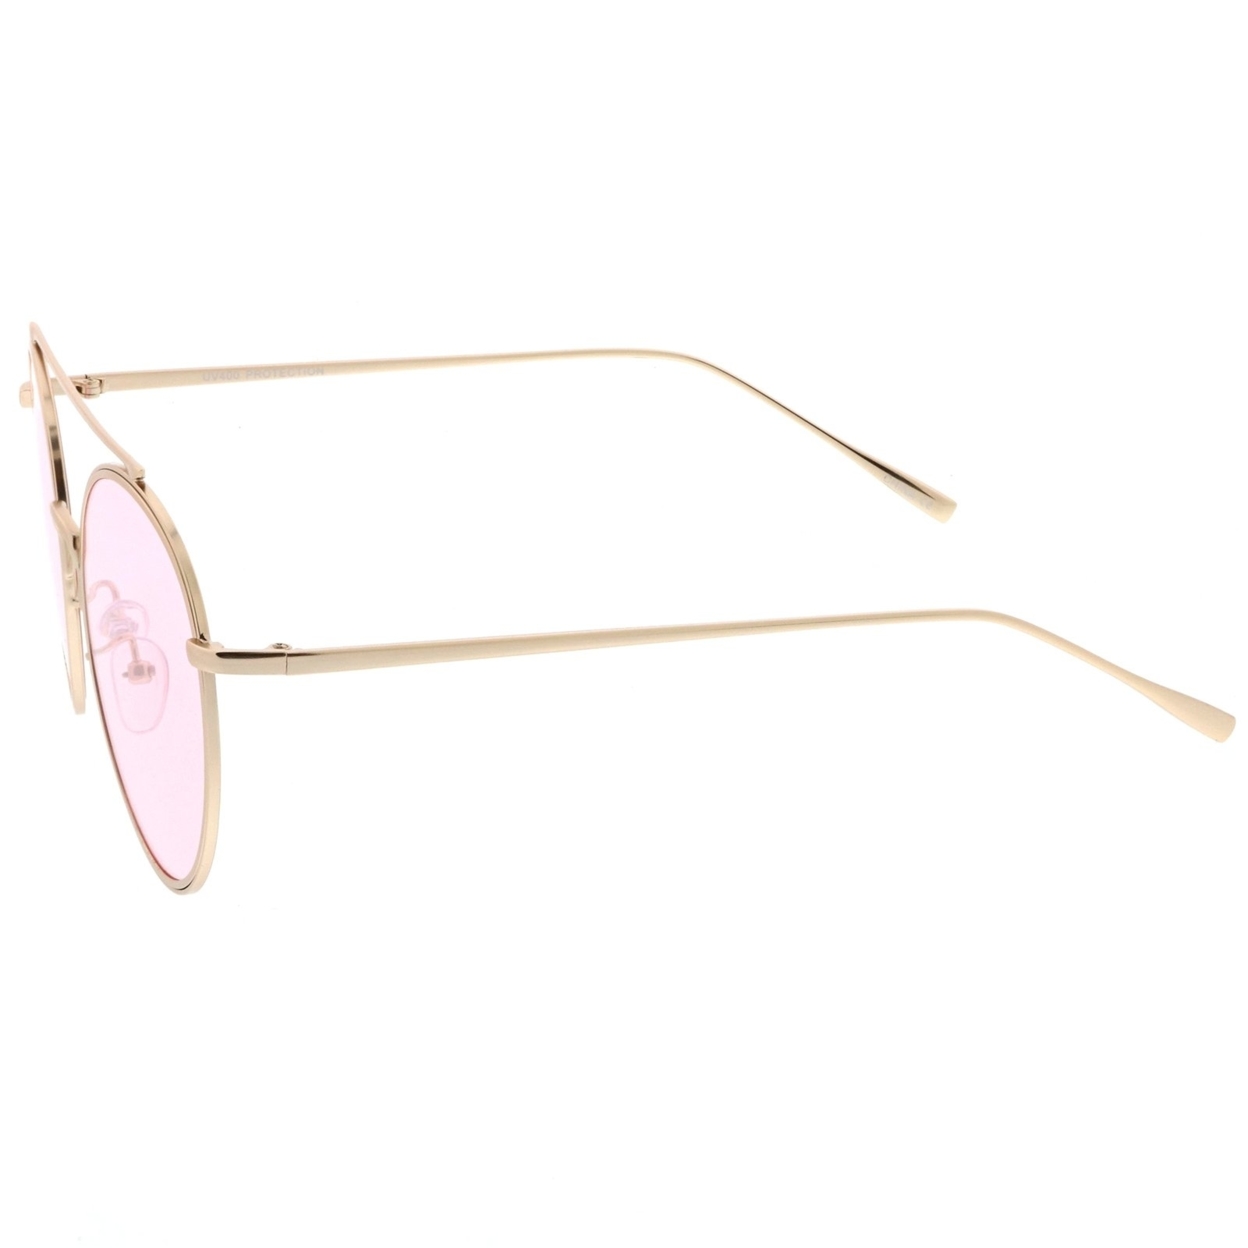 Modern Metal Crossbar Slim Temple Colored Flat Lens Round Aviator Sunglasses 54mm - Gold / Pink